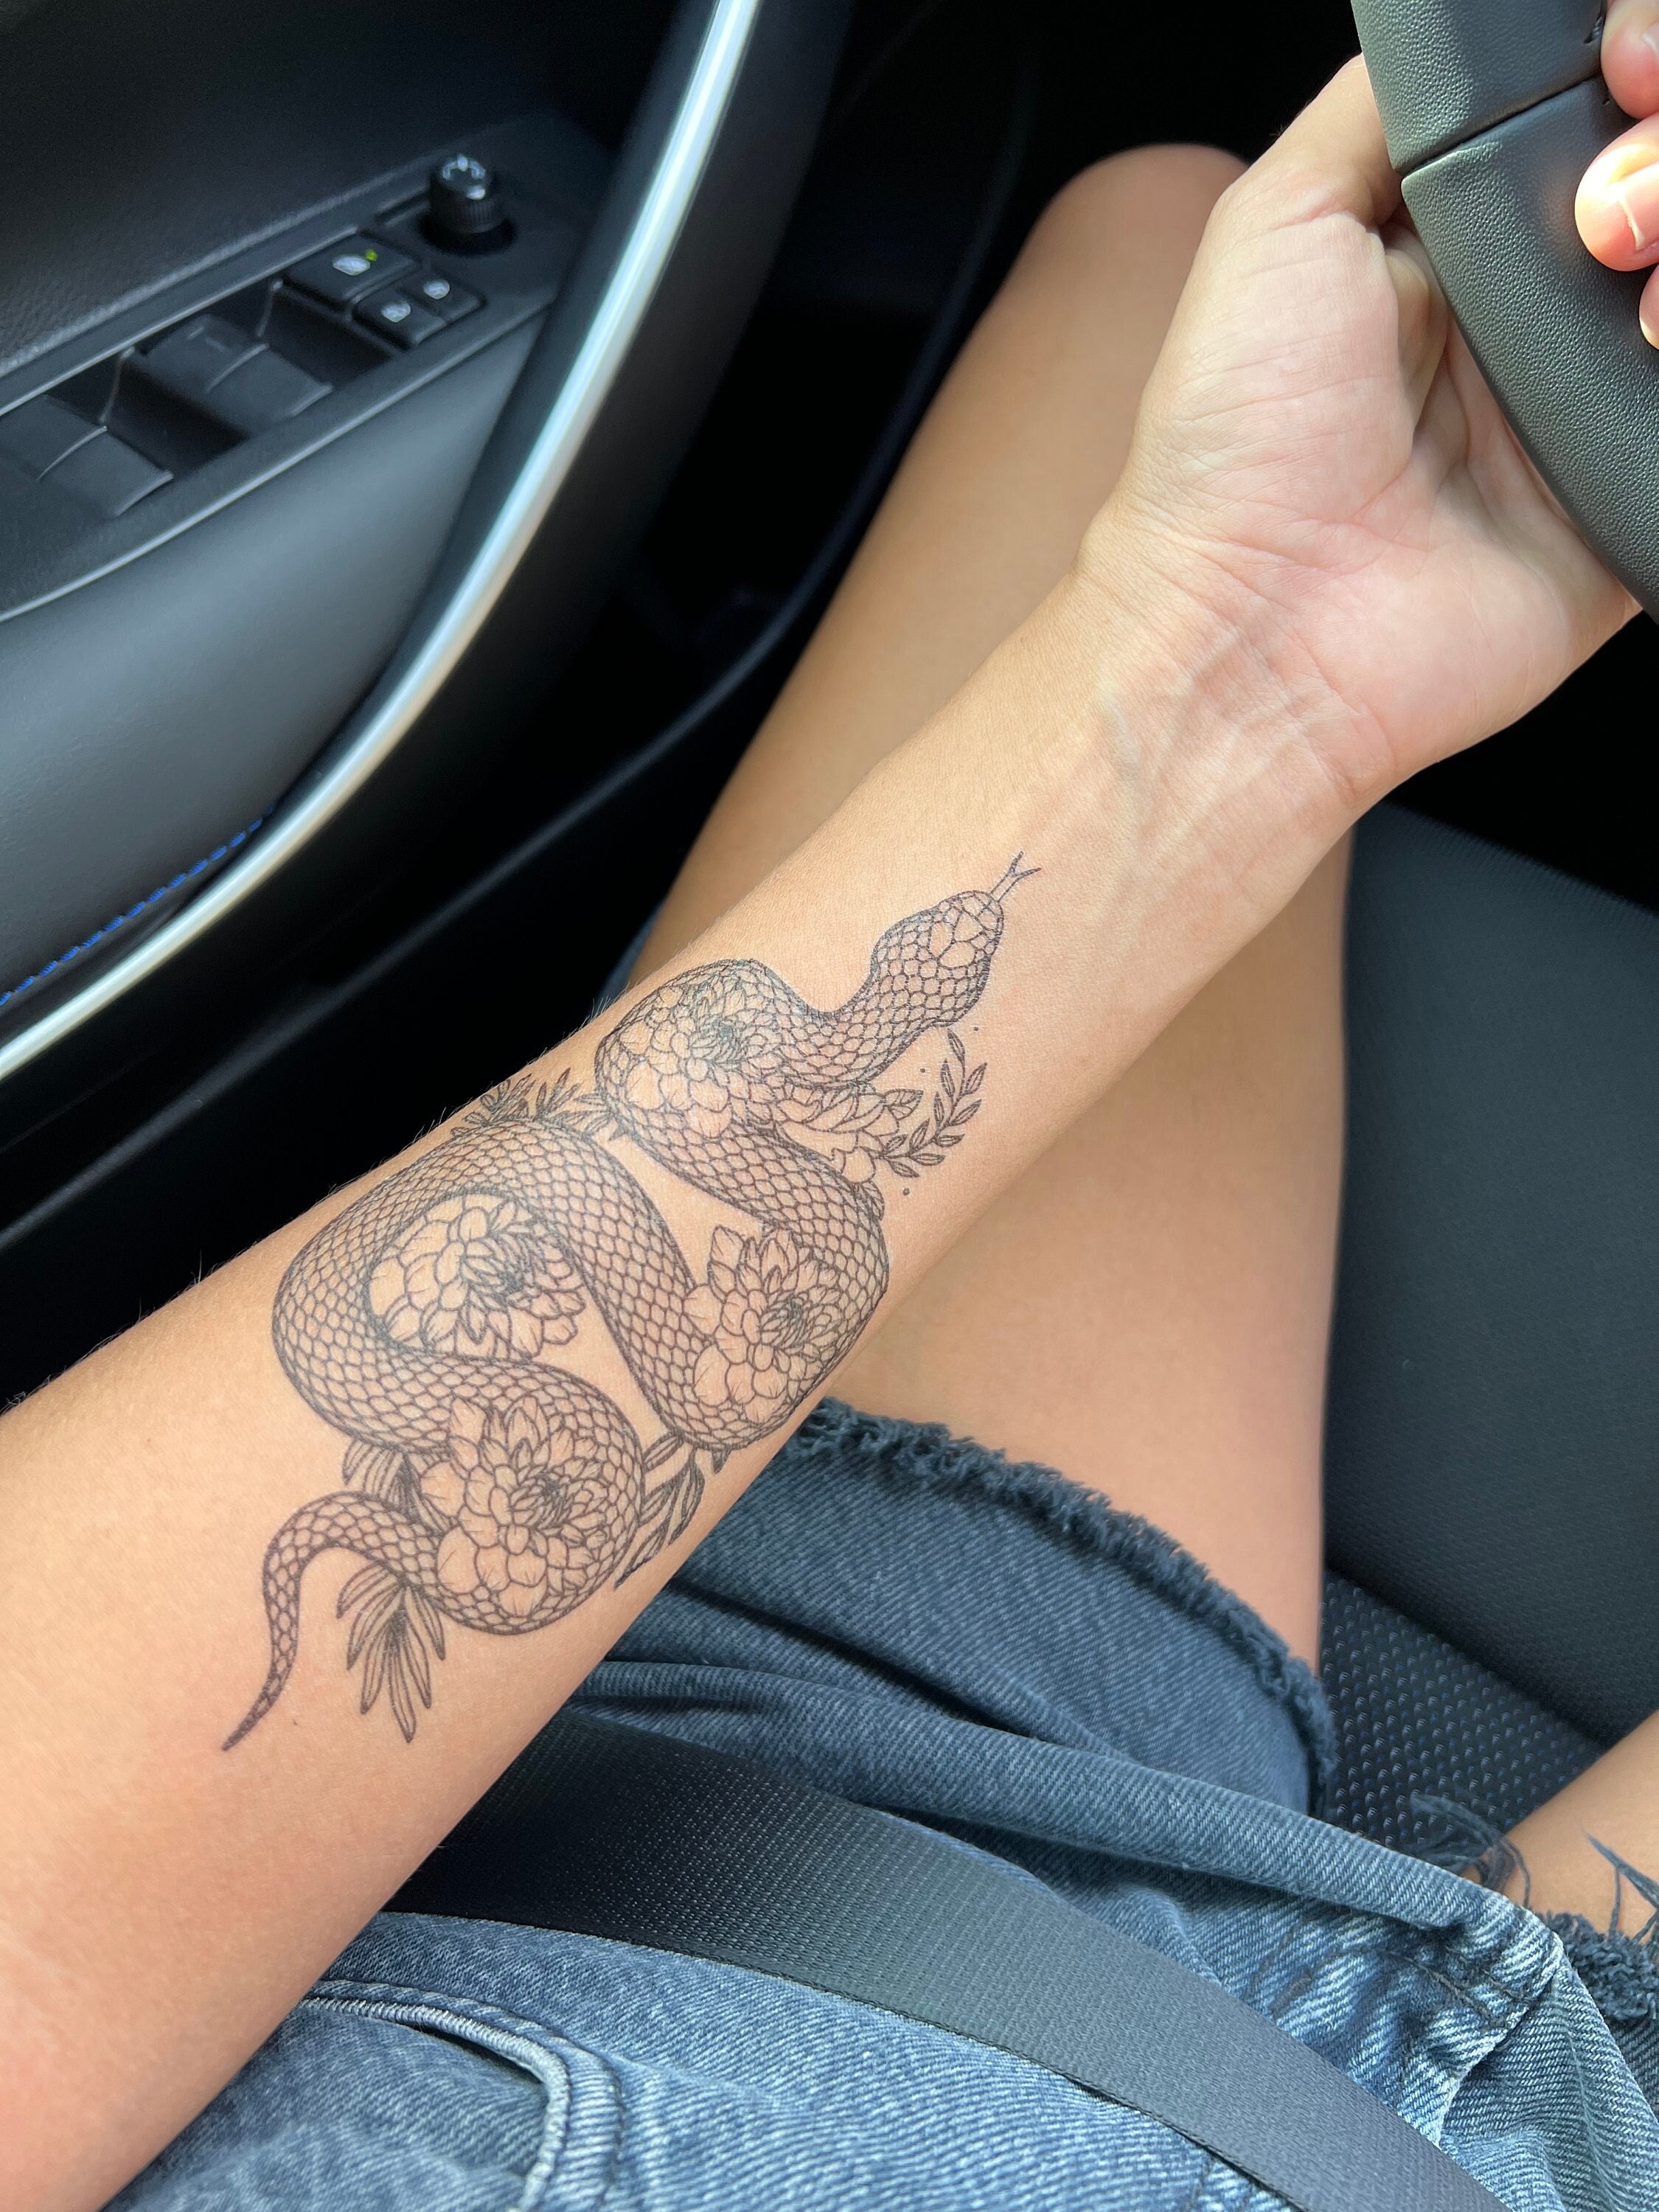 Single needle snake tattoo on the Sydney Parks wrist